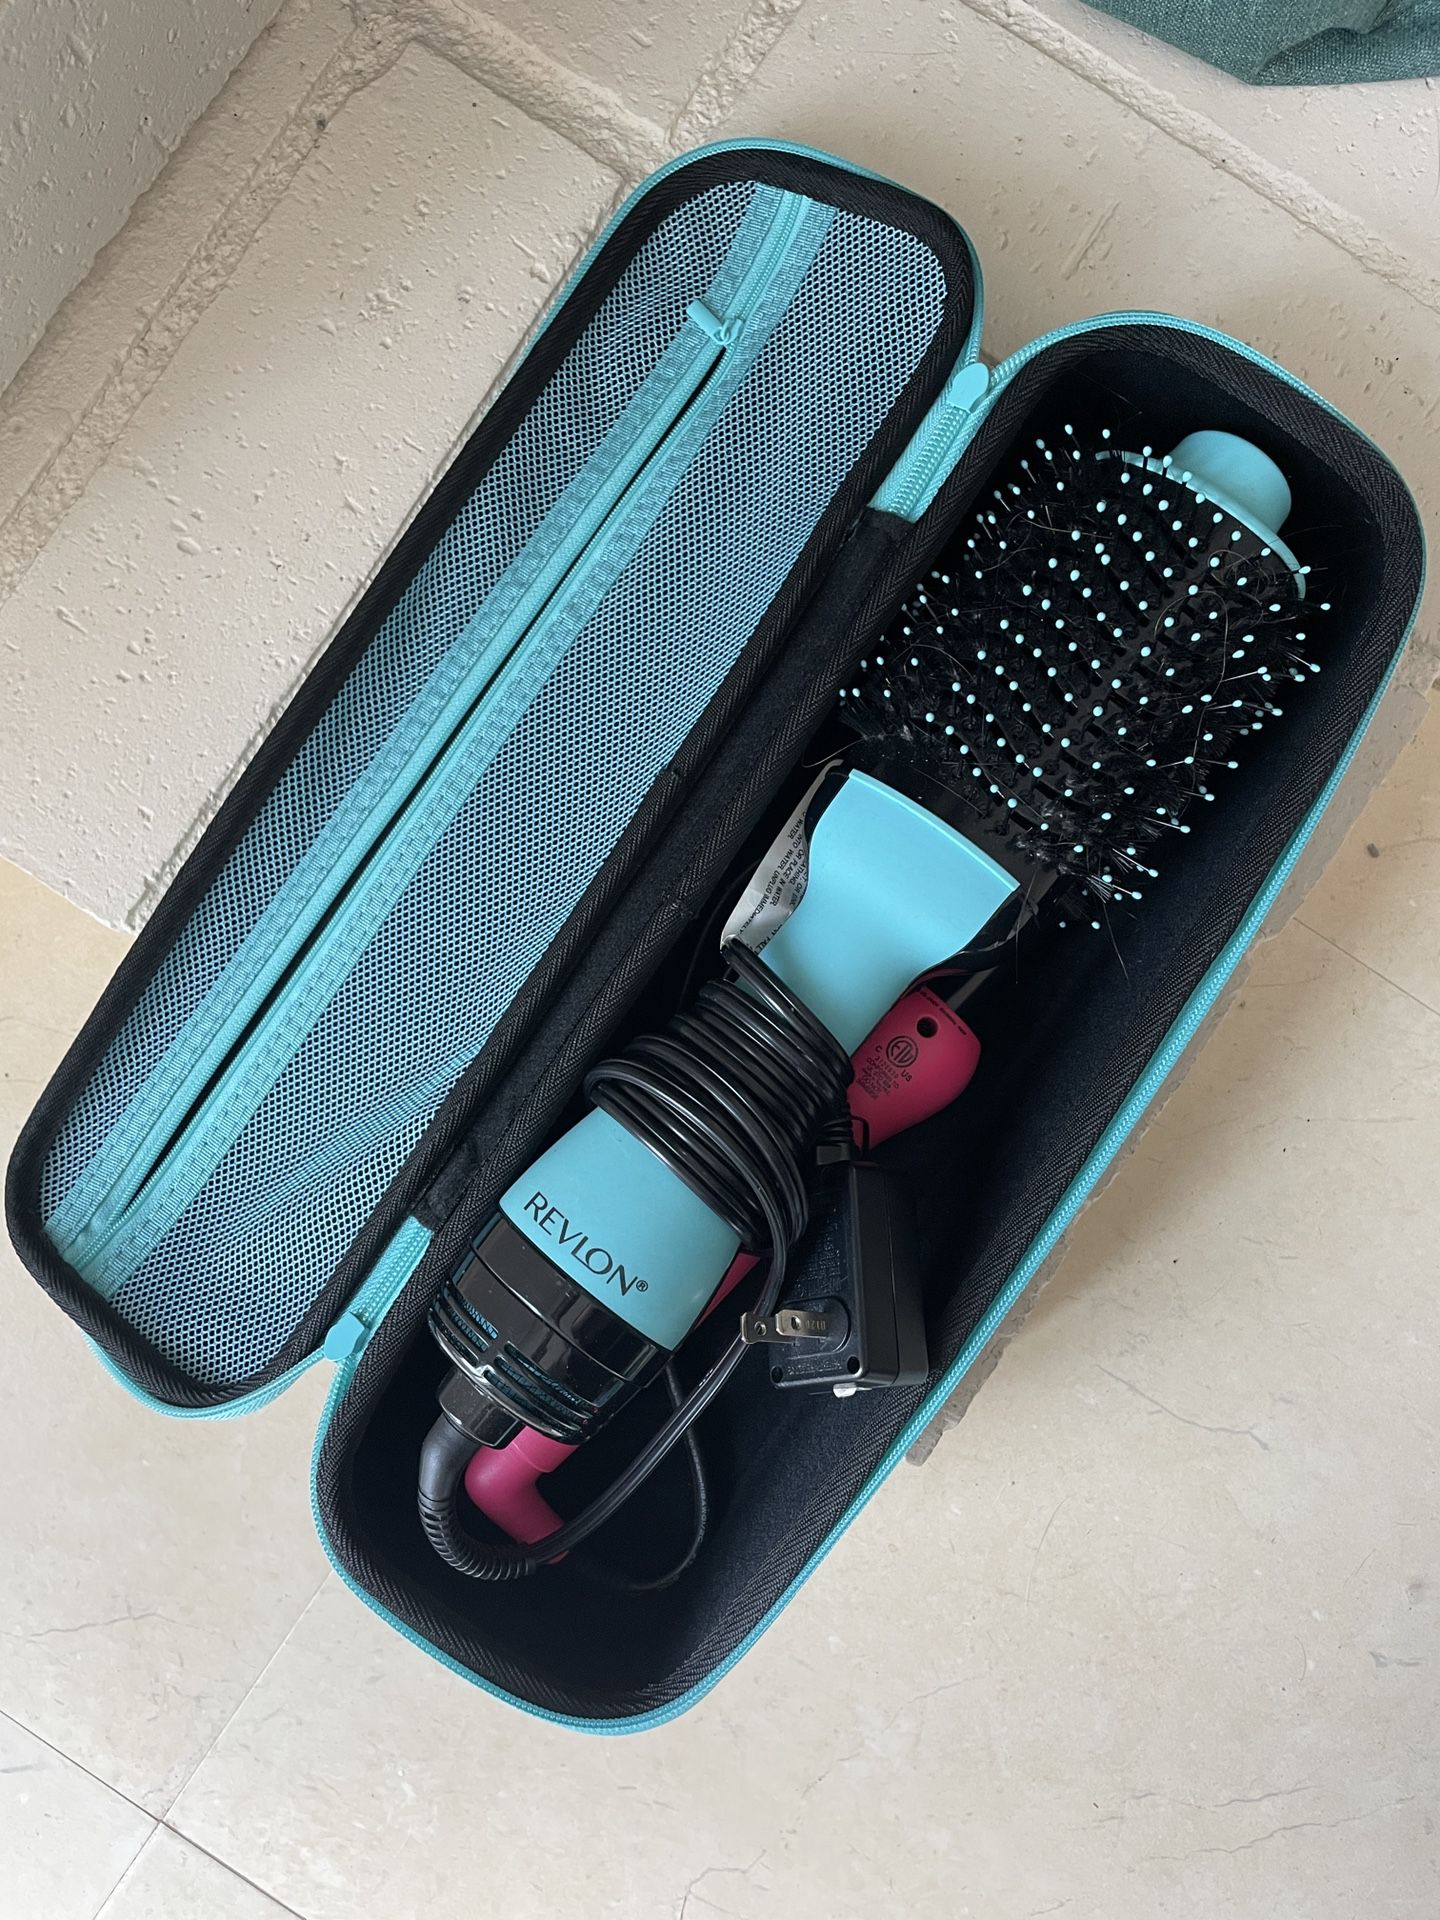 Hair Tools Travel & Storage Case